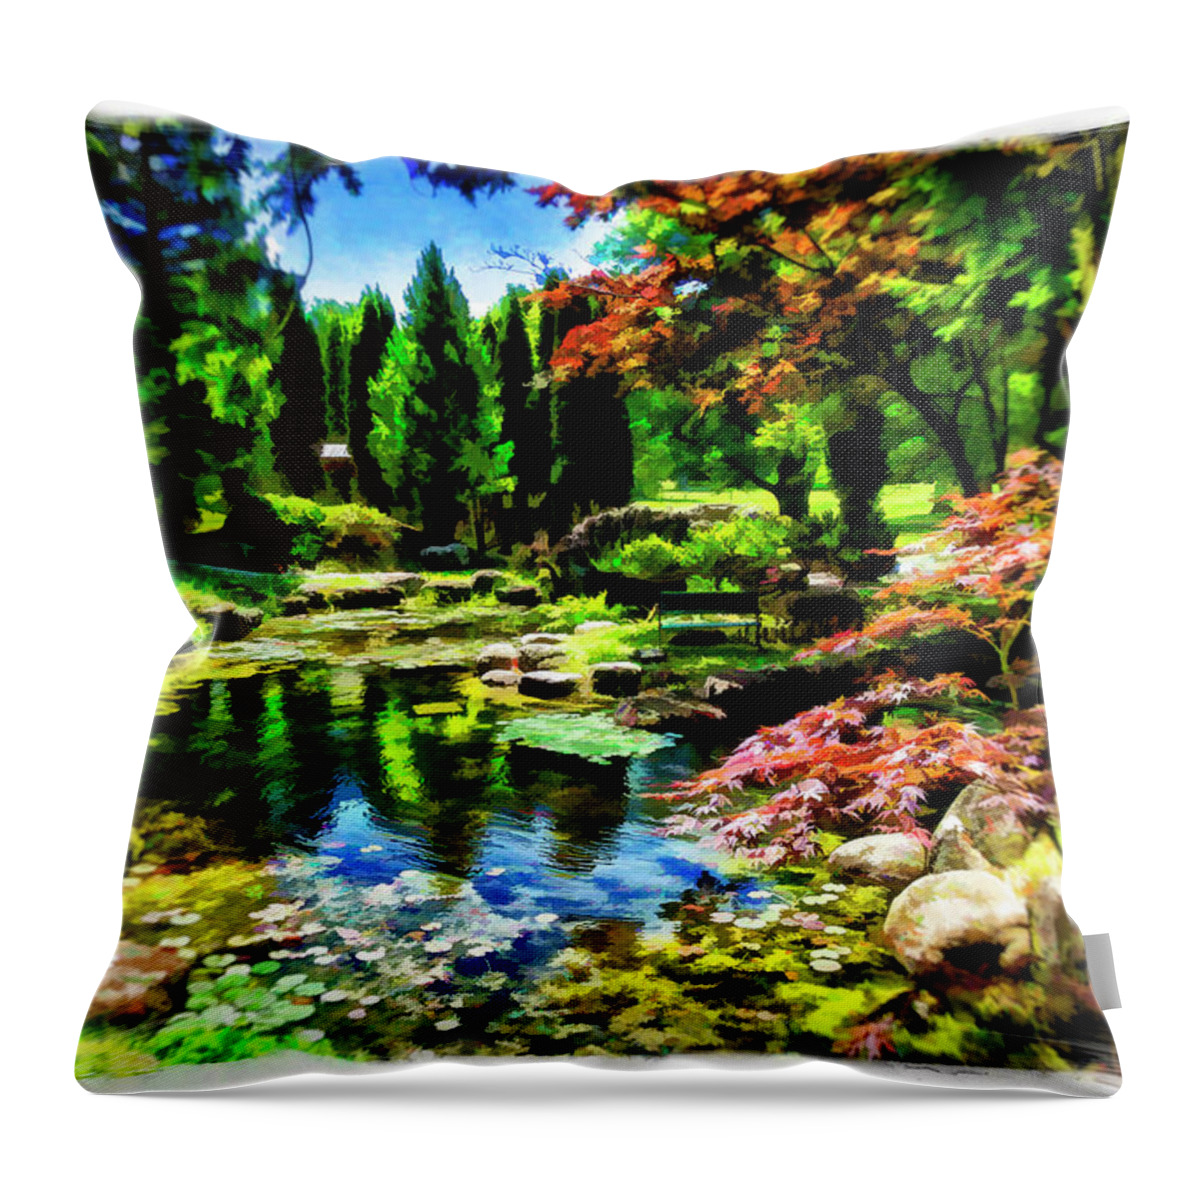 Sonnenberg Gardens Throw Pillow featuring the photograph Japanese Garden by Monroe Payne